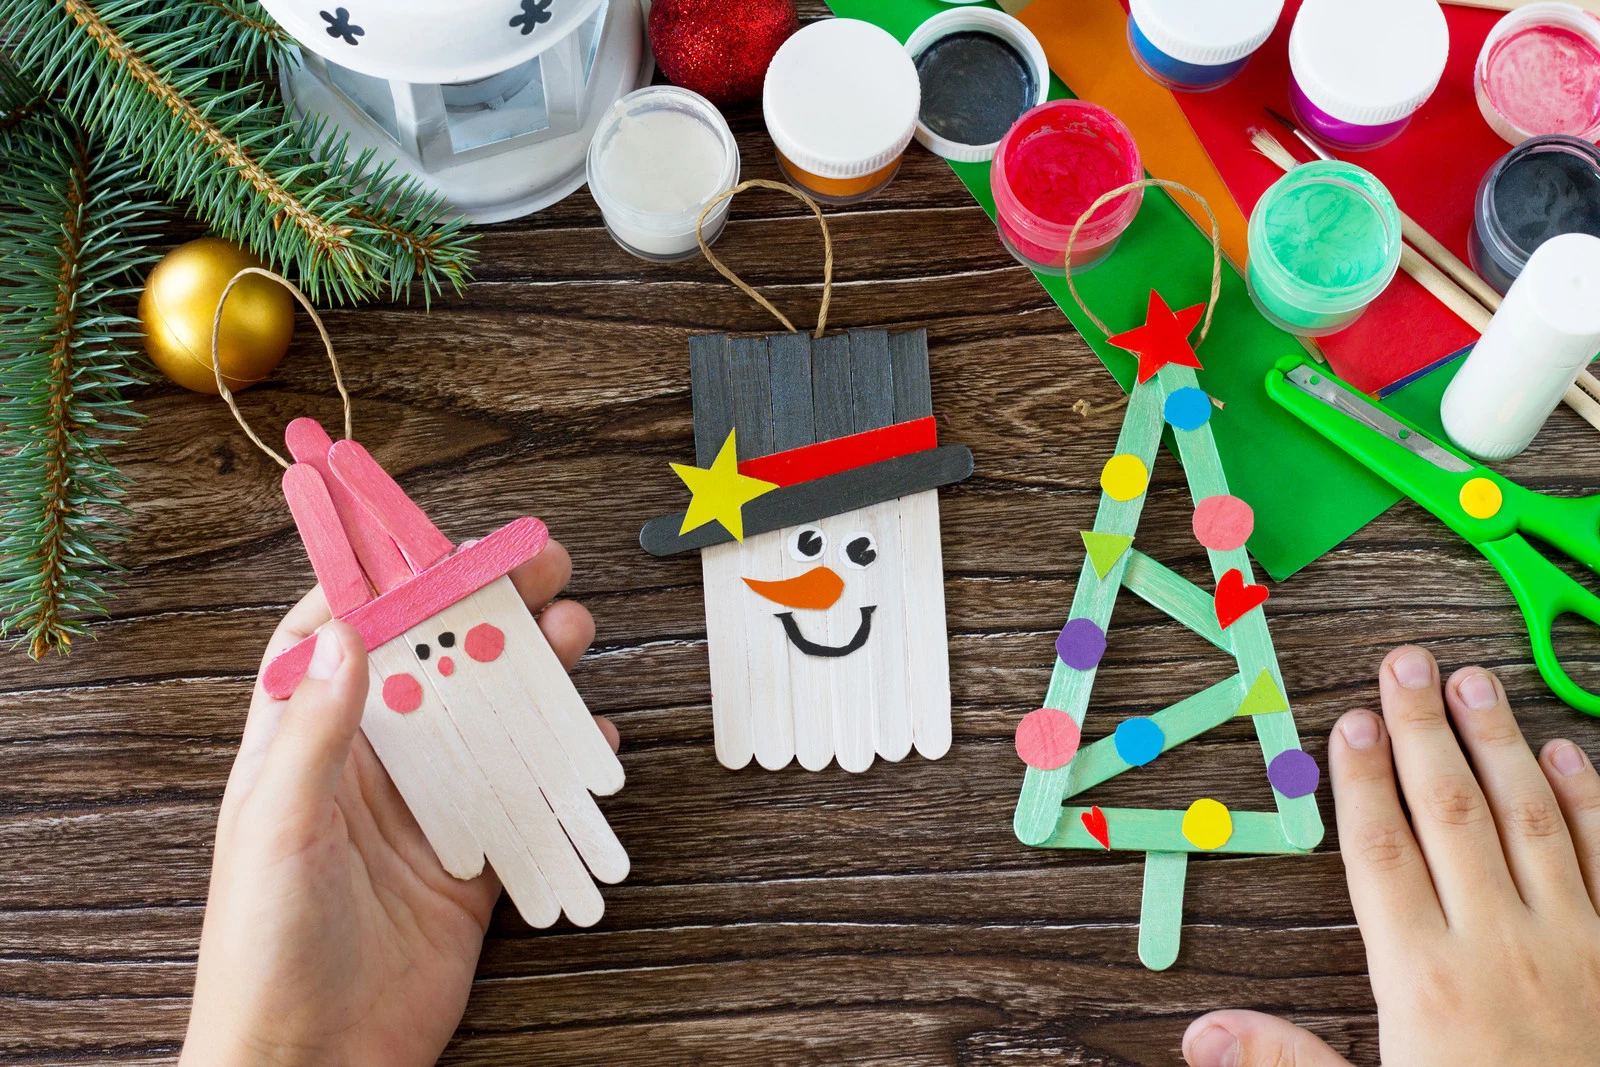 53 Crafty, Creative DIY Christmas Gifts